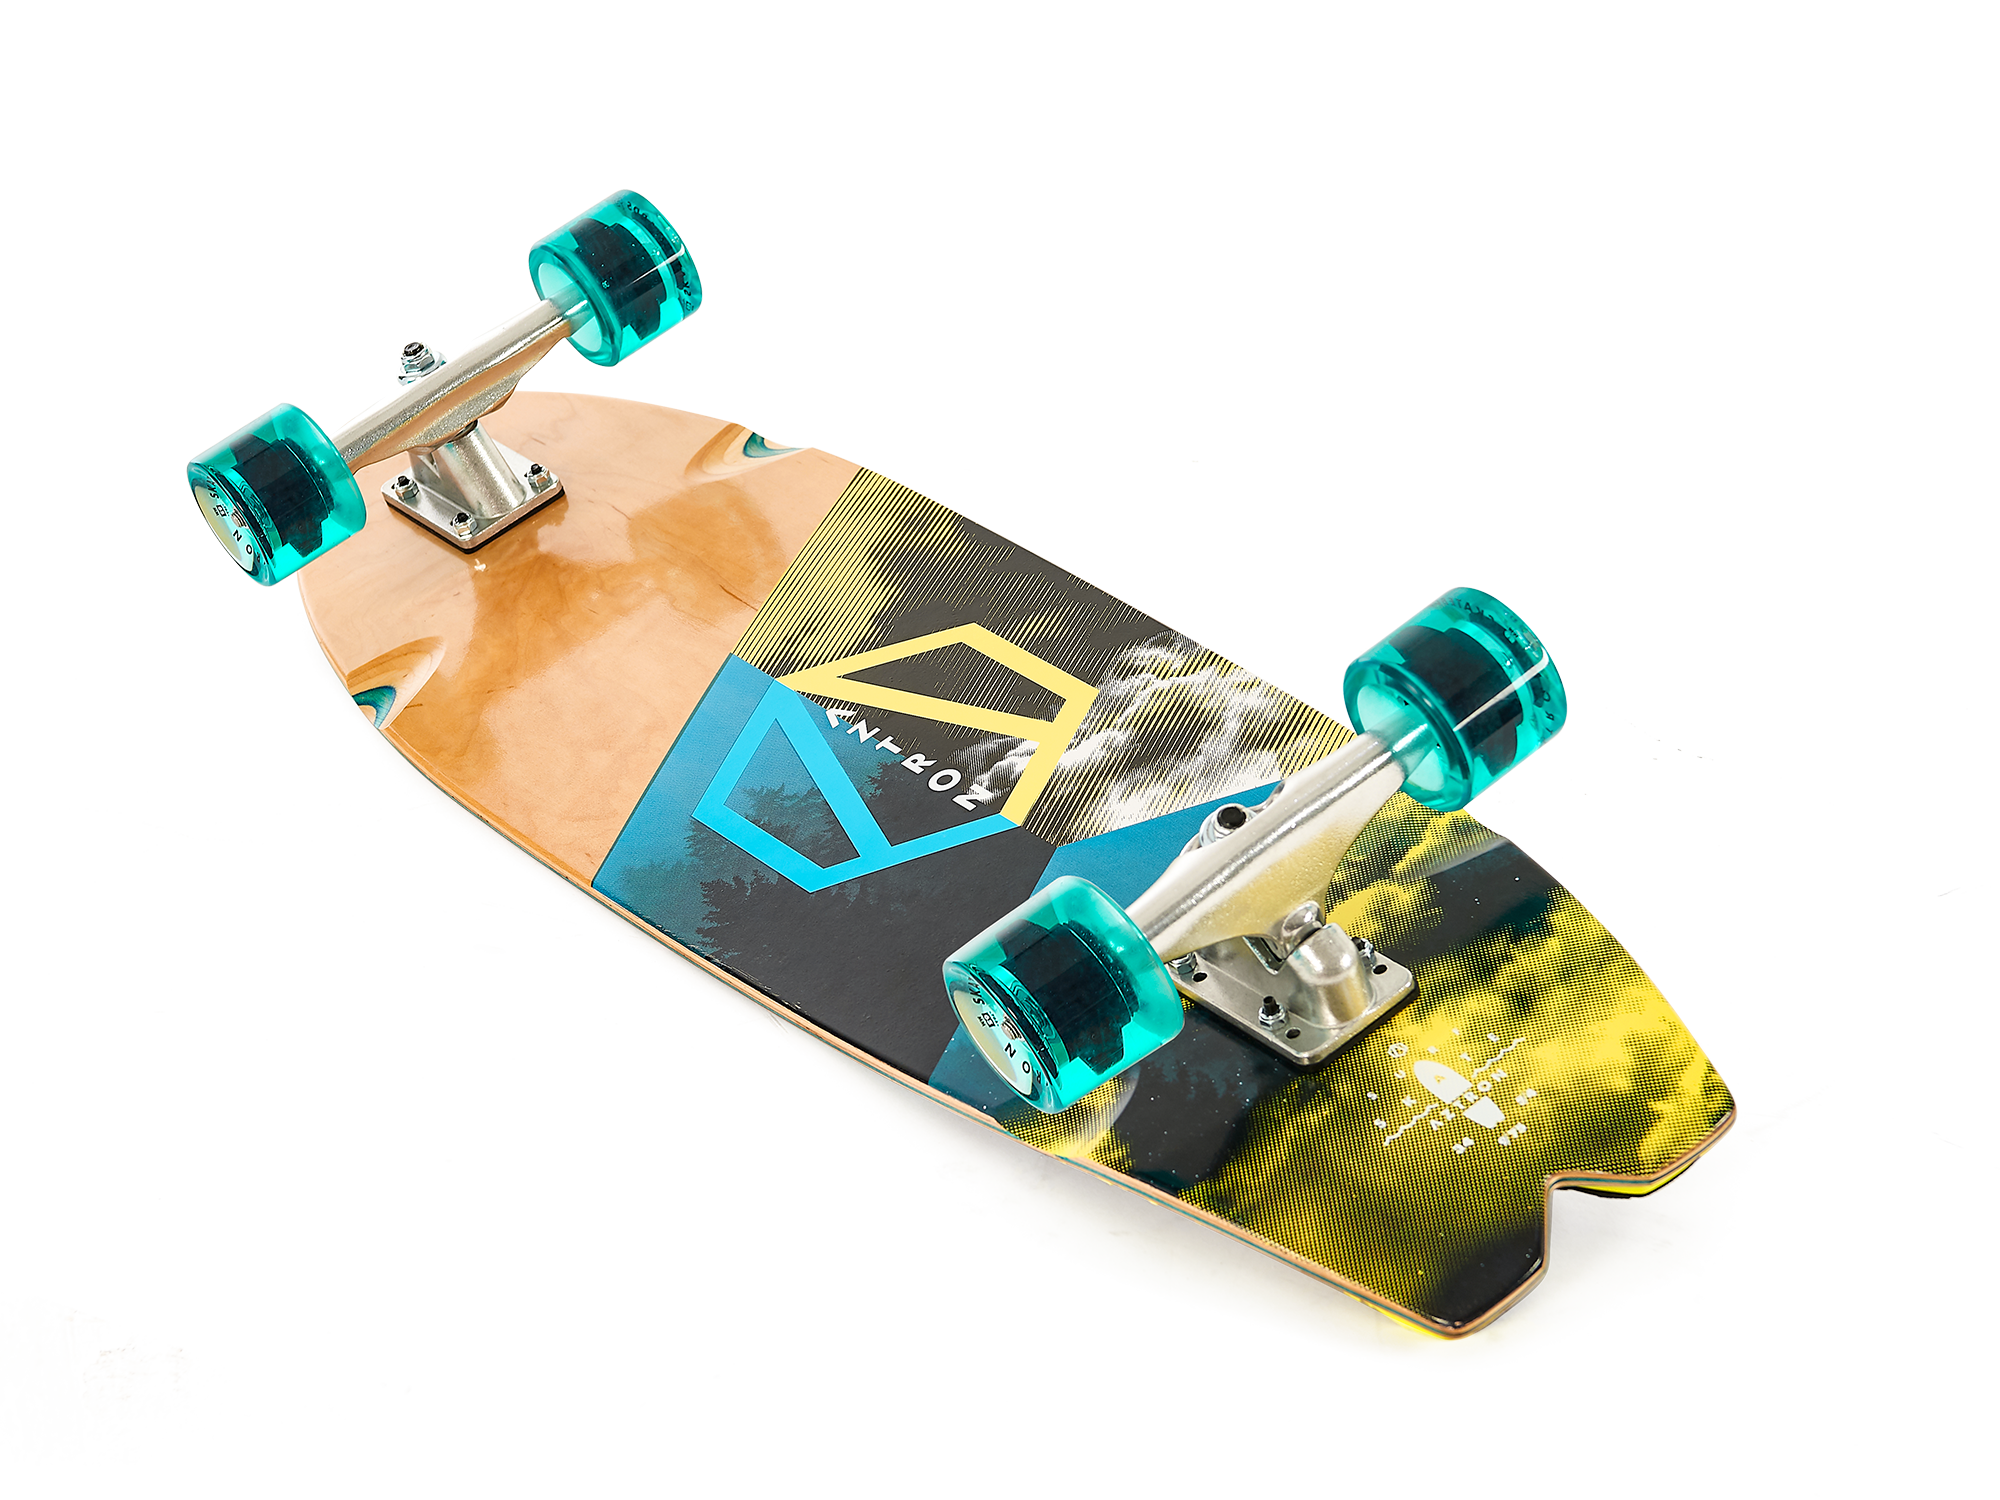 Aztron Surf Skateboard Space 40 "tabela | Sport Zone MKP